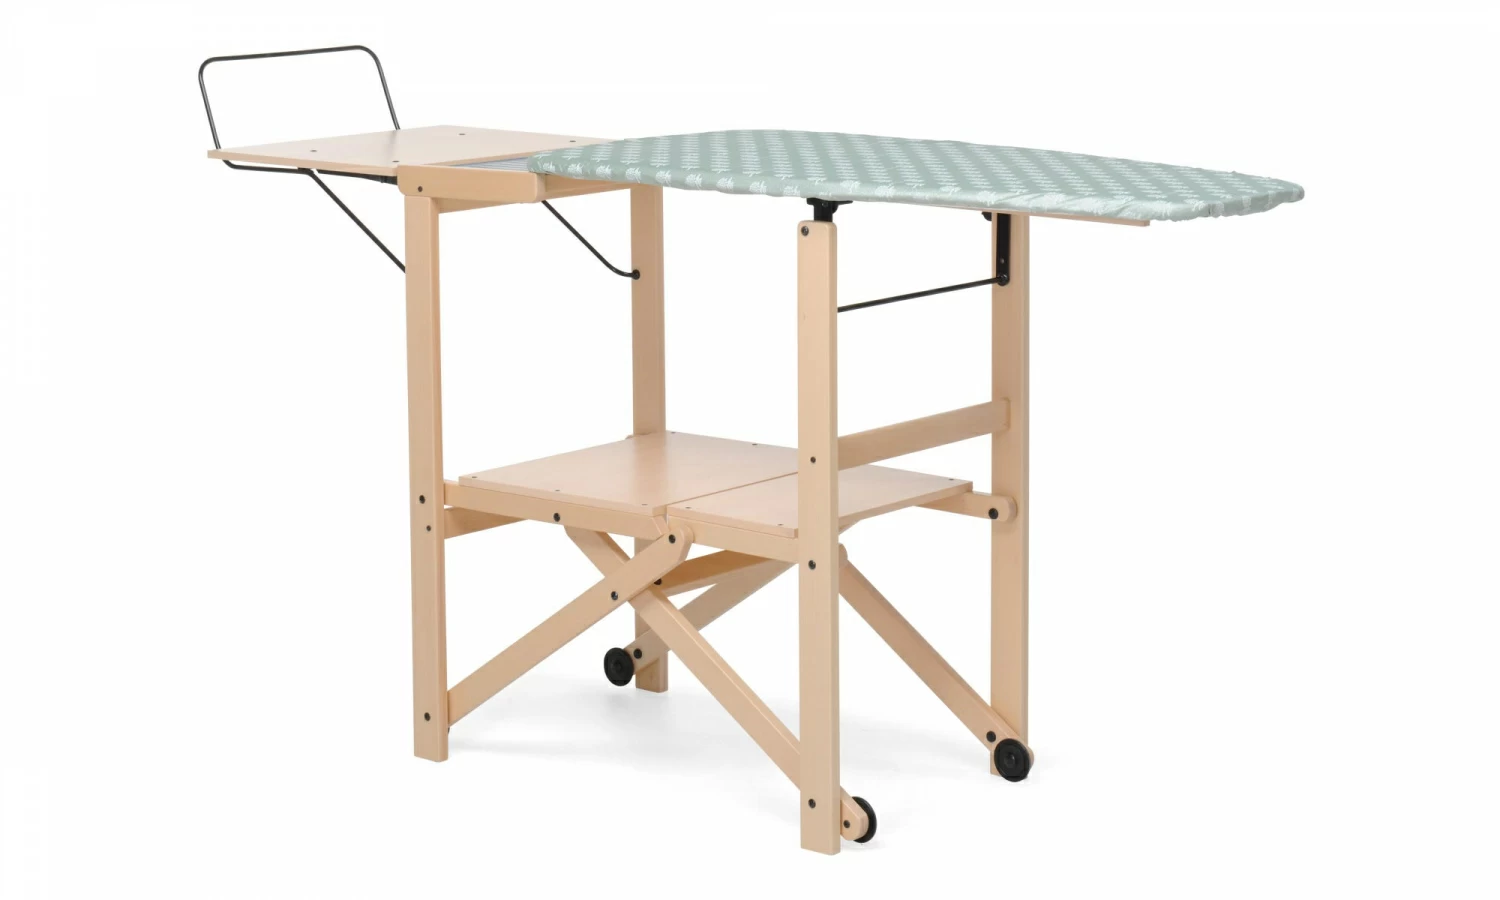 Гладильный стол своими руками | Sewing room design, Sewing room furniture, Removable cover